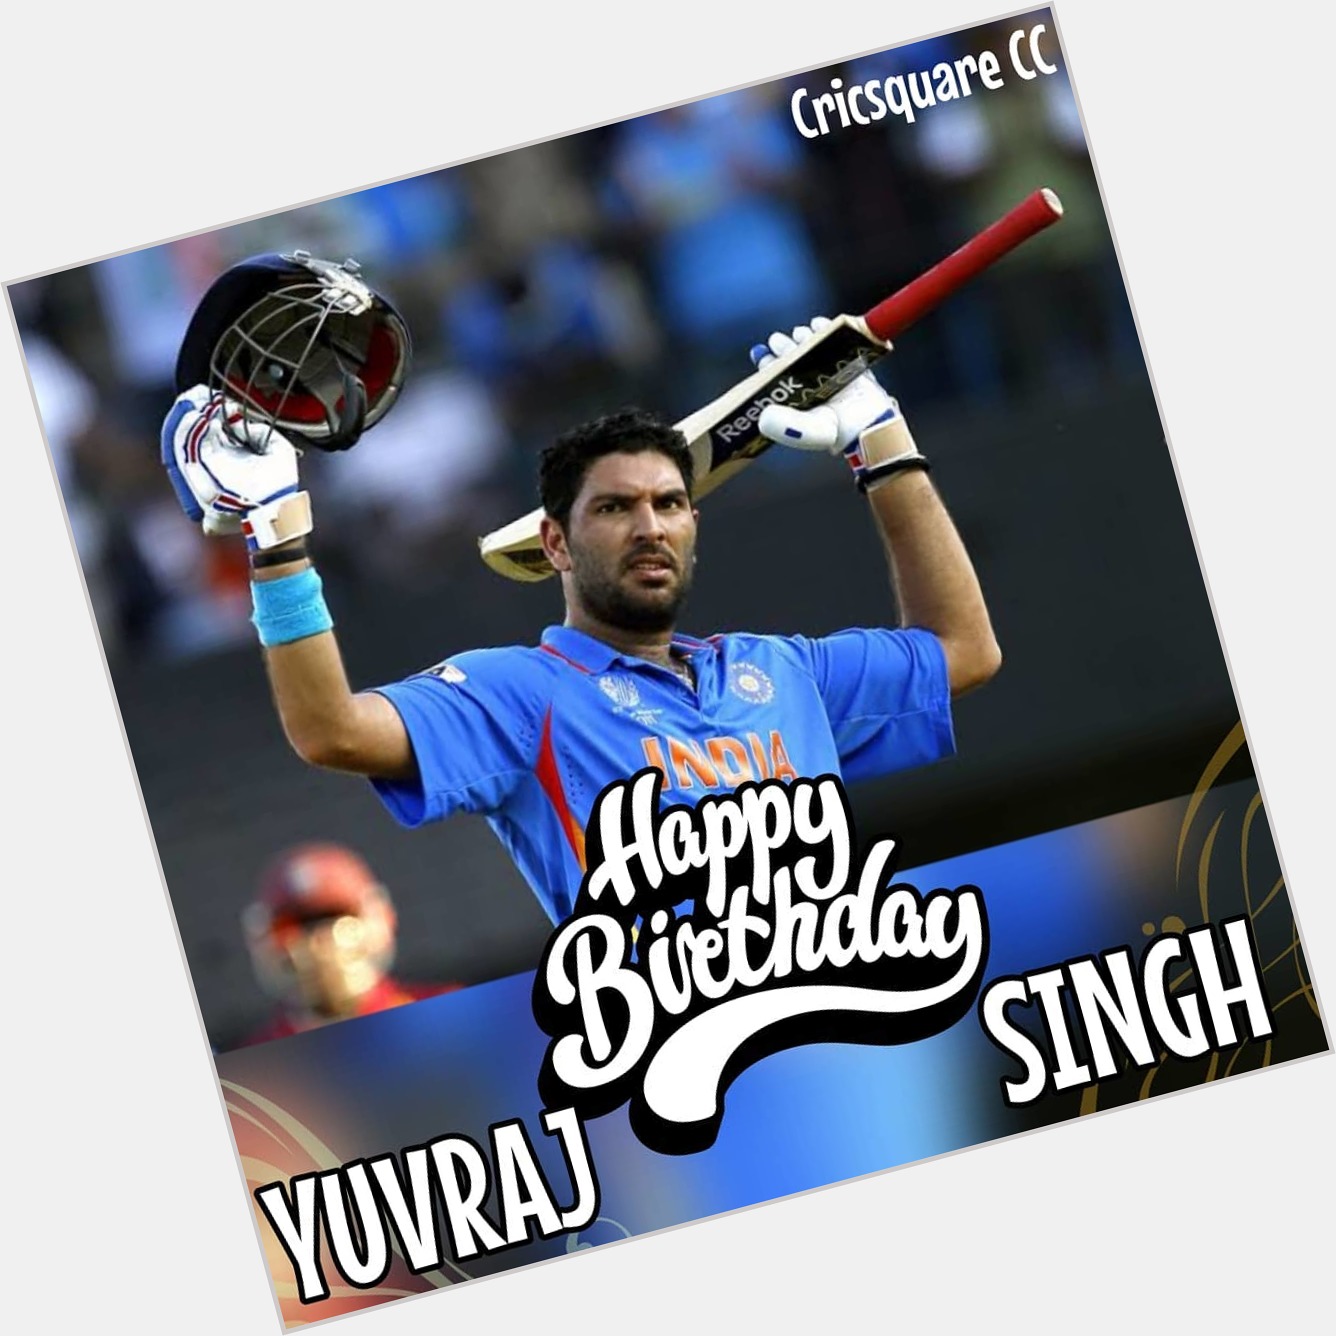 Cricsquare # Happy Birthday to a true warrior Yuvraj Singh. 